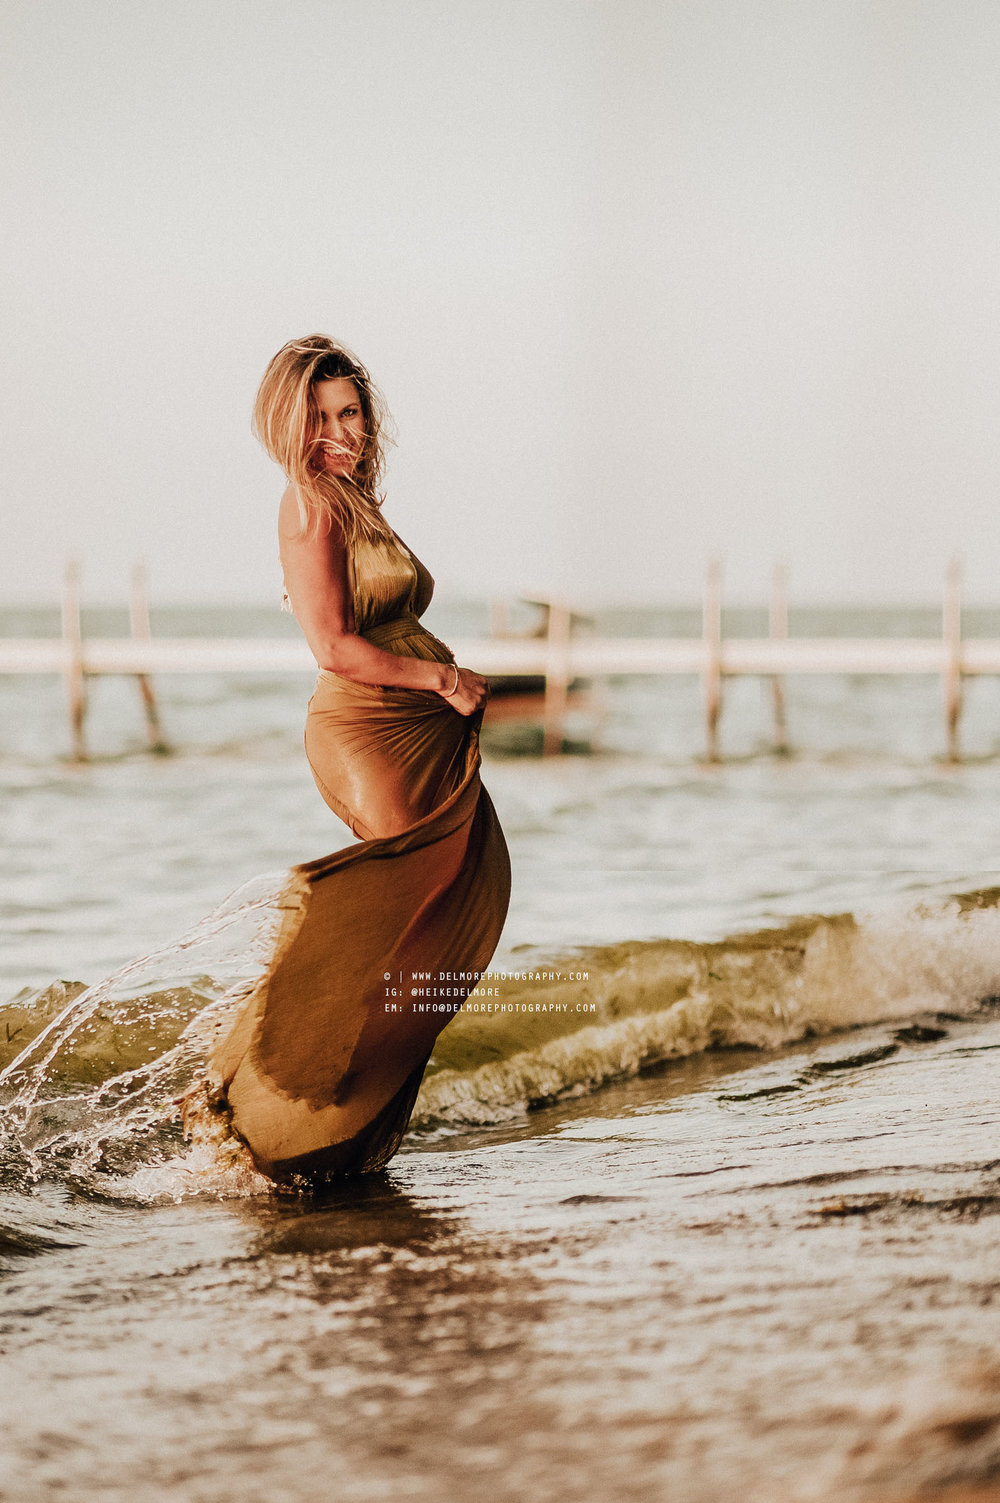 Top Windsor Maternity Photographer Heike Delmore Lake Shoot